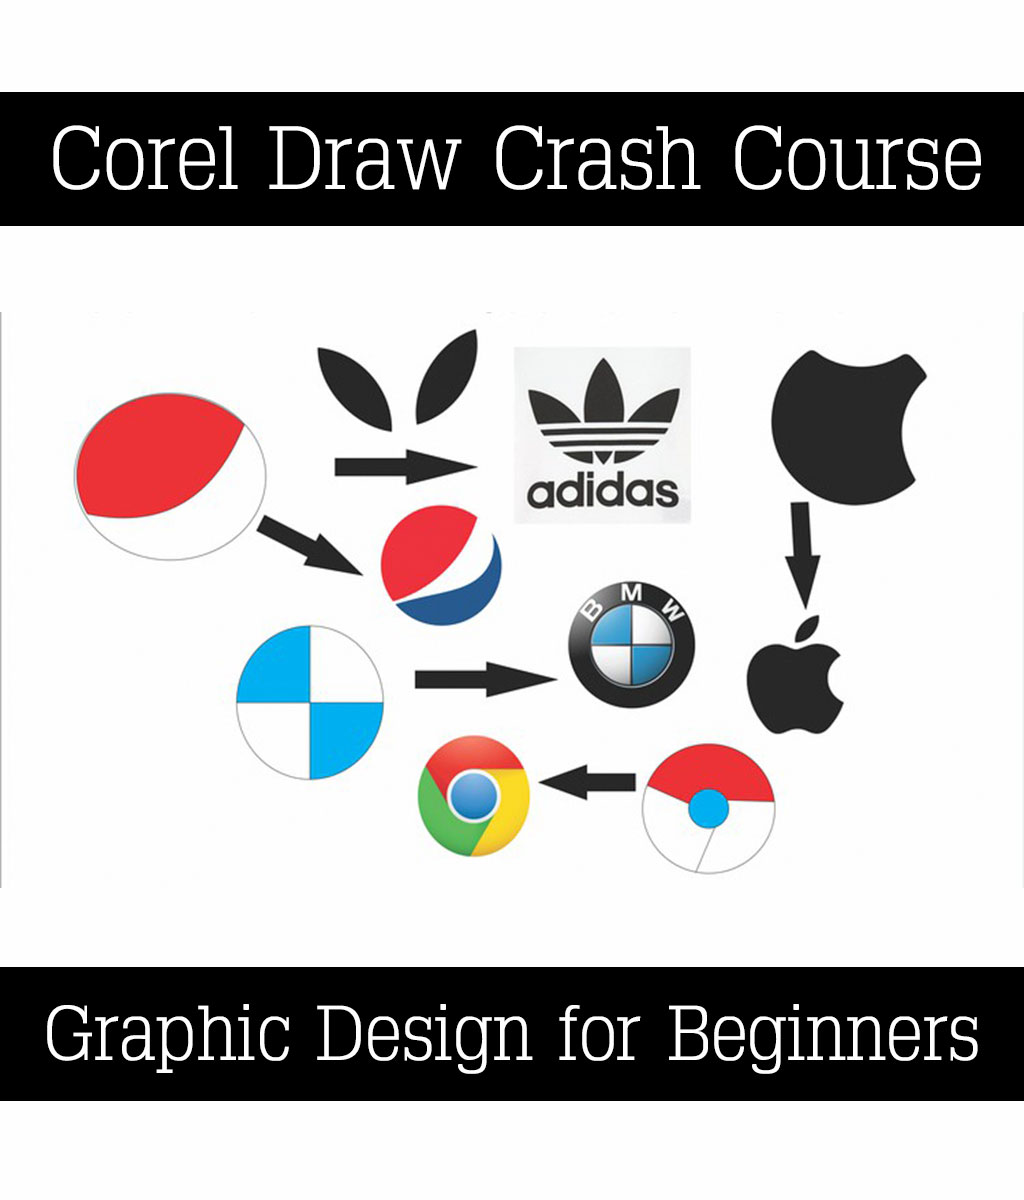 CorelDraw Crash Course